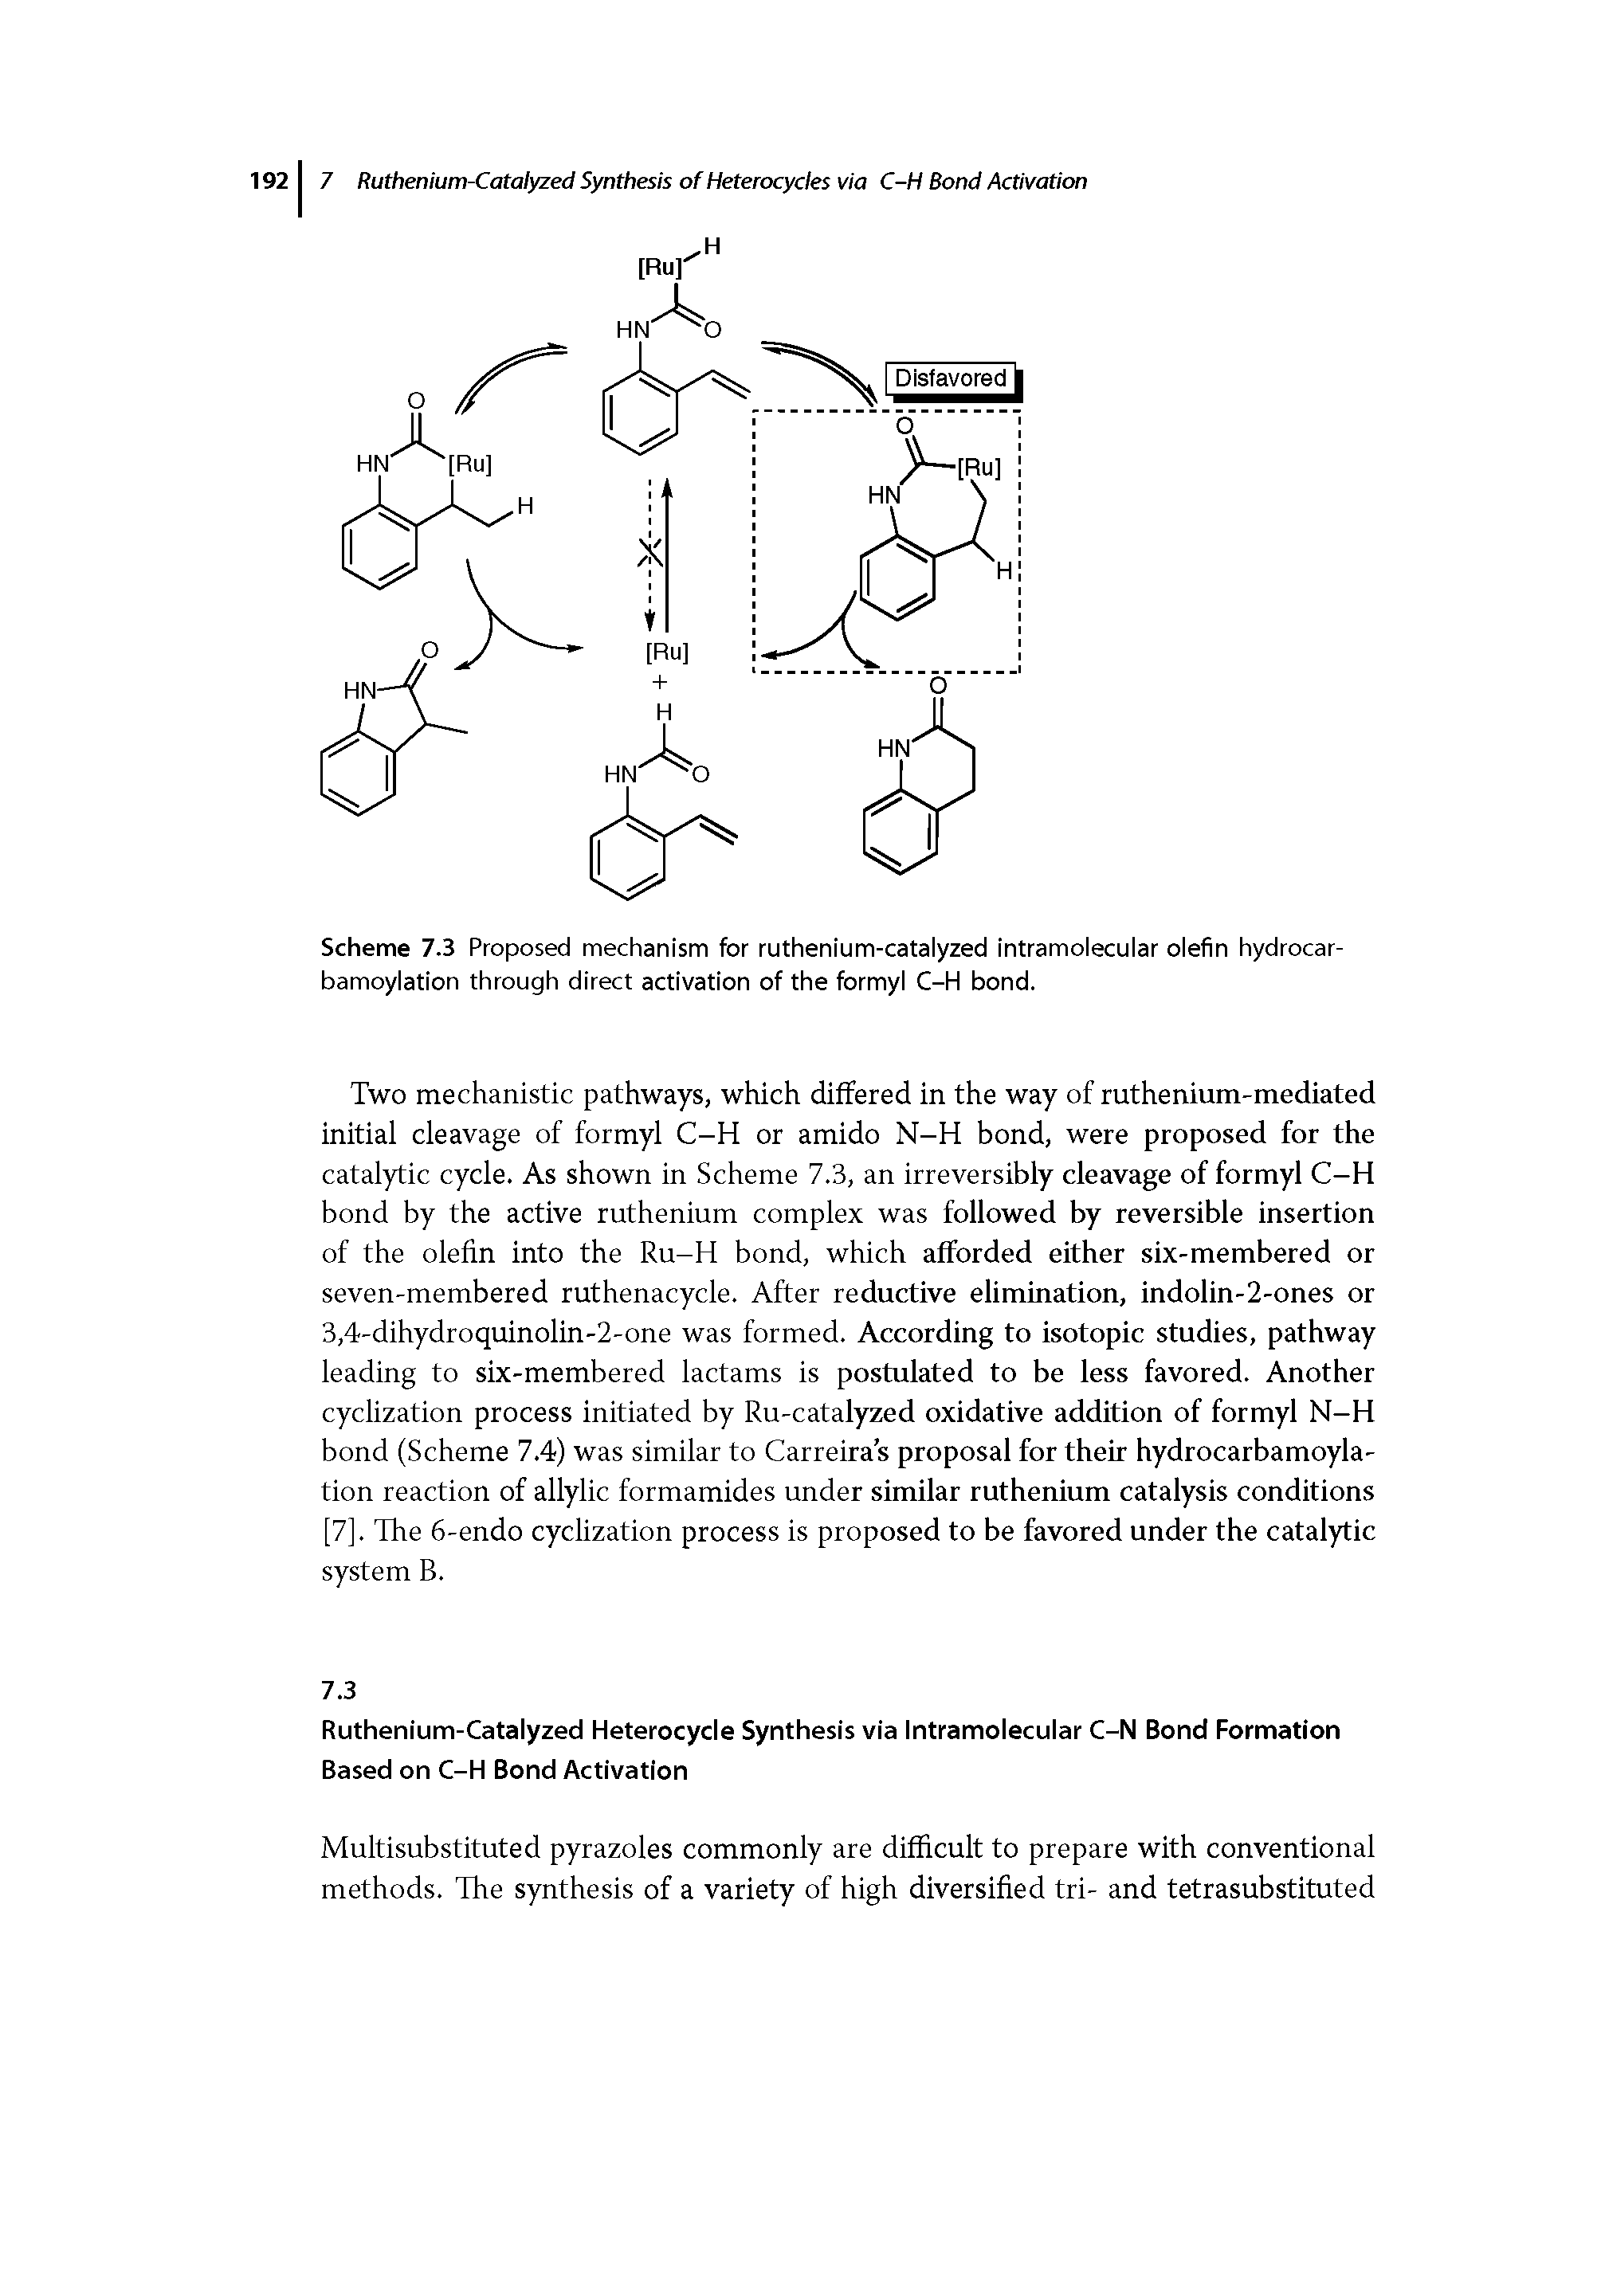 Scheme 7.3 Proposed mechanism for ruthenium-catalyzed intramolecular olefin hydrocar-bamoylation through direct activation of the formyl C-H bond.